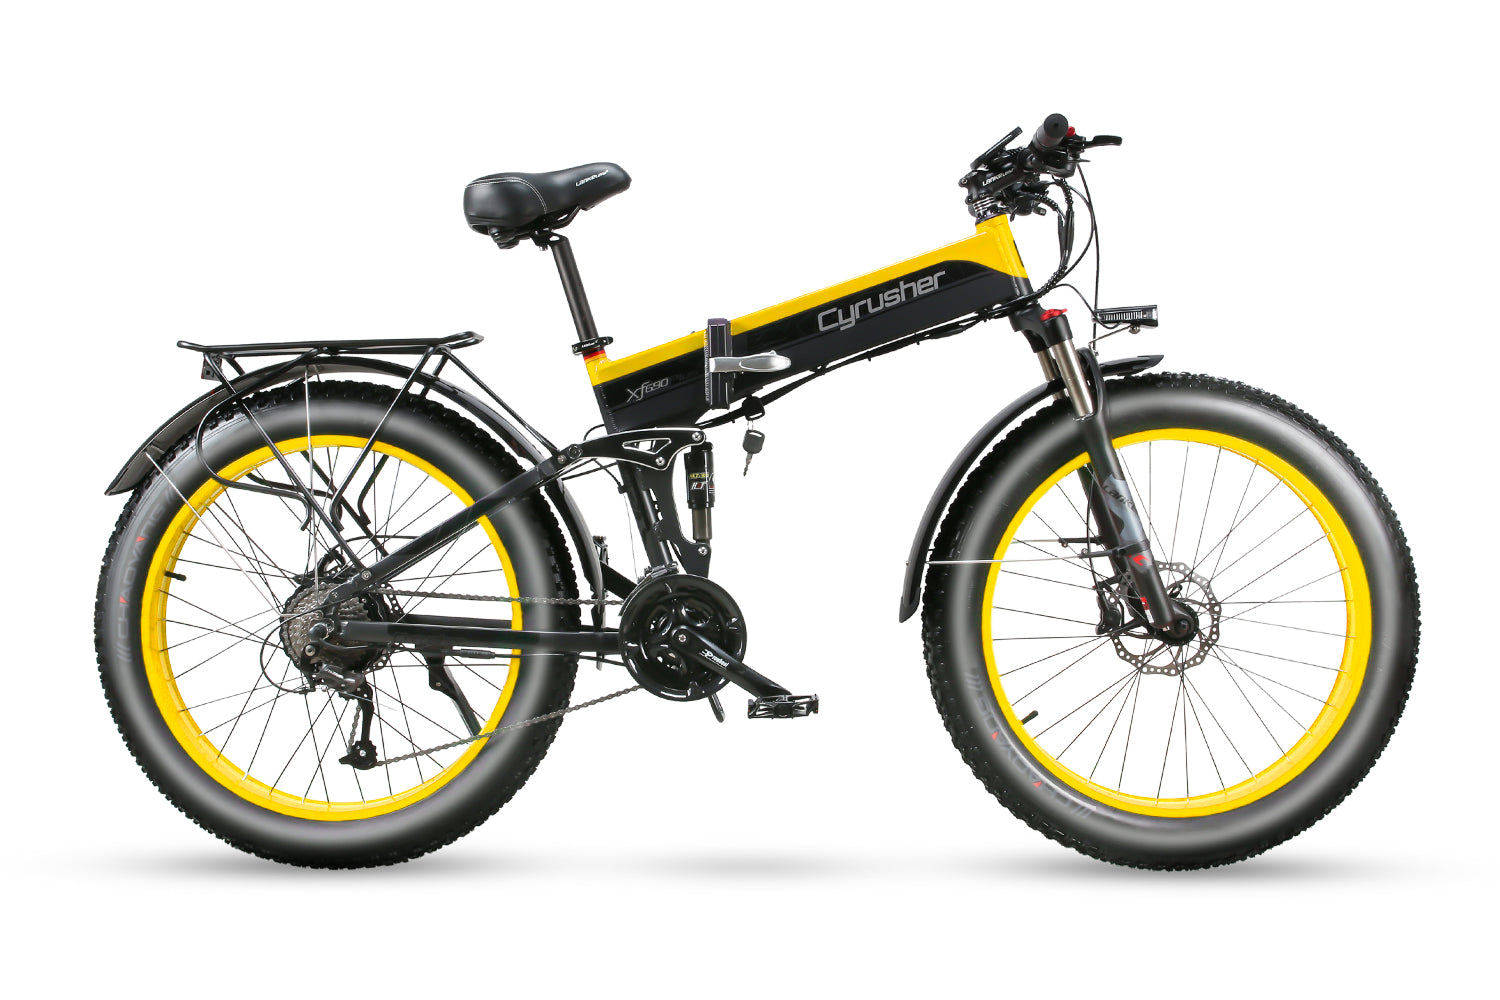 Cyrusher Xf690 opvouwbare elektrische fiets